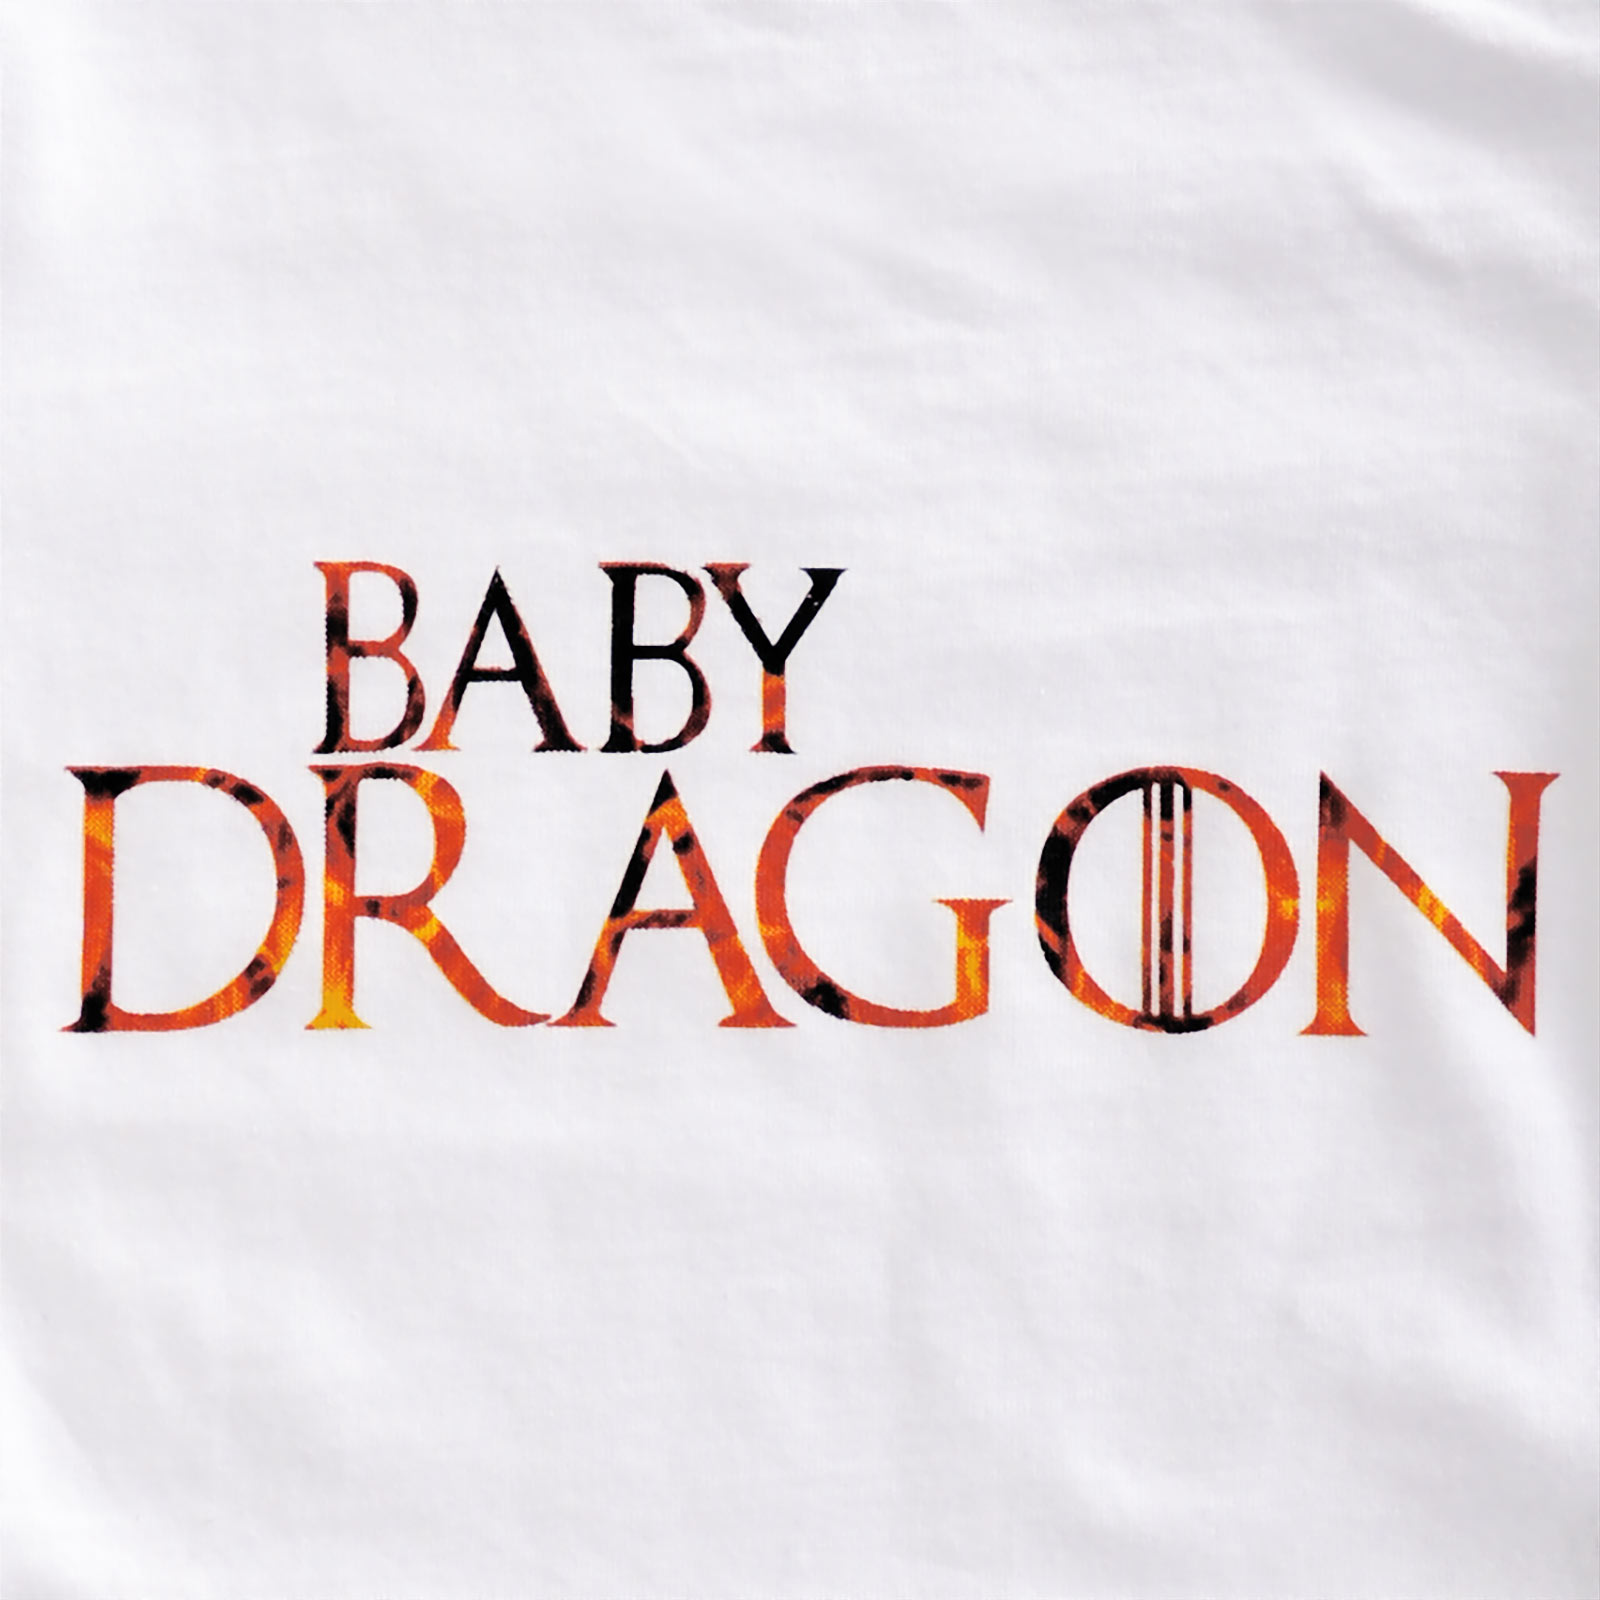 Baby Dragon - Kinder T-shirt Wit